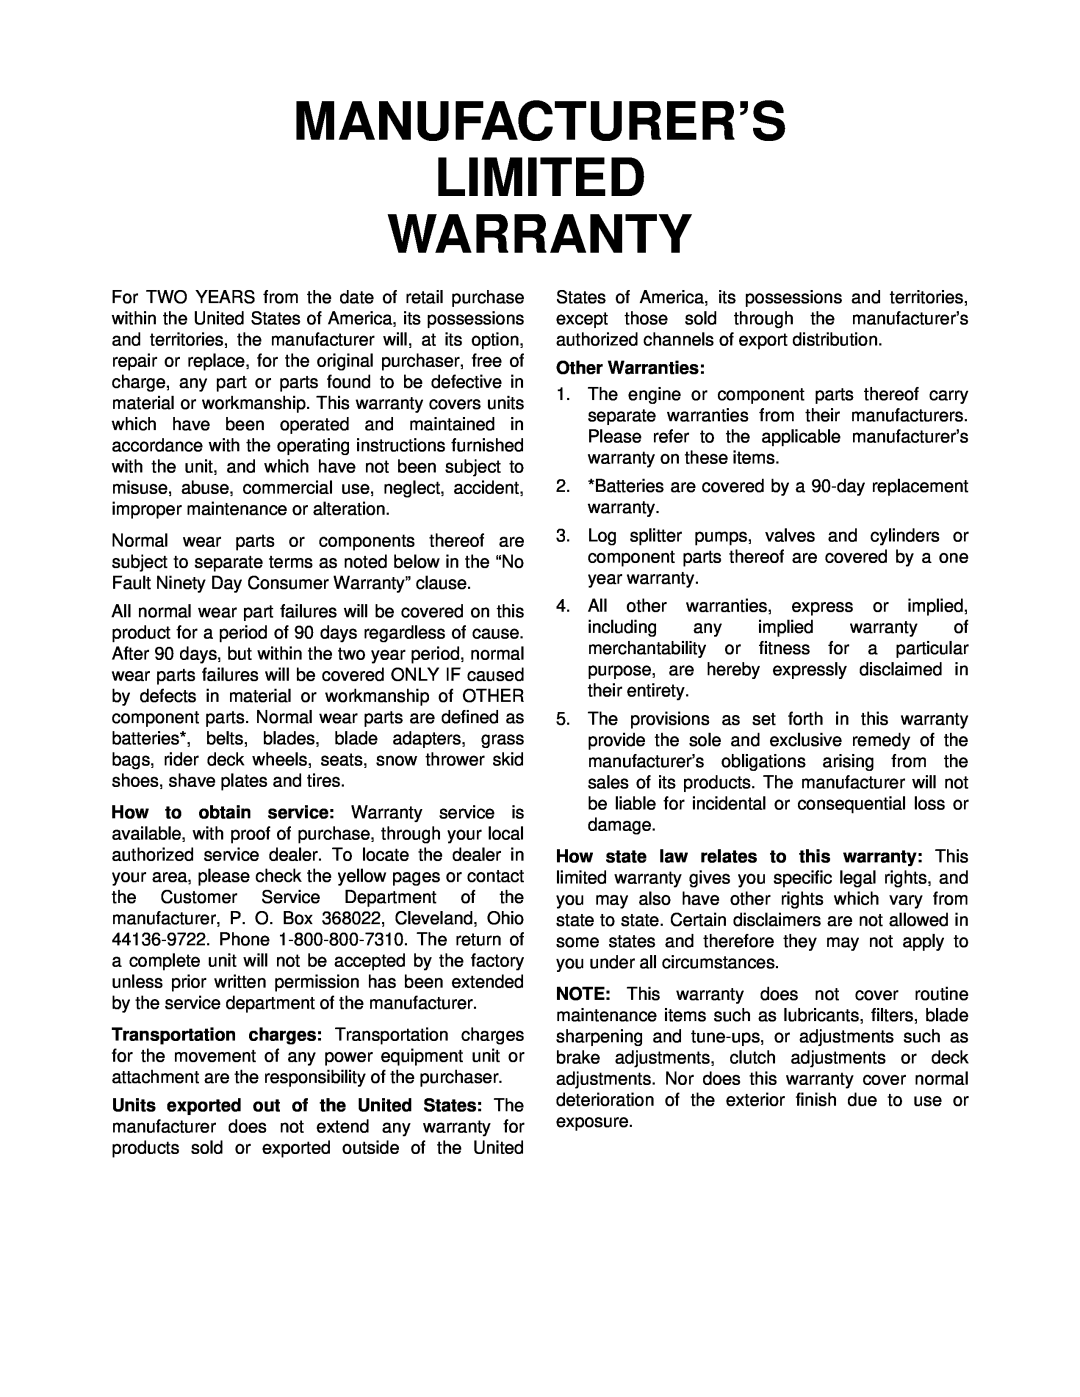 MTD Series 140 thru 152 manual Manufacturer’S Limited Warranty 